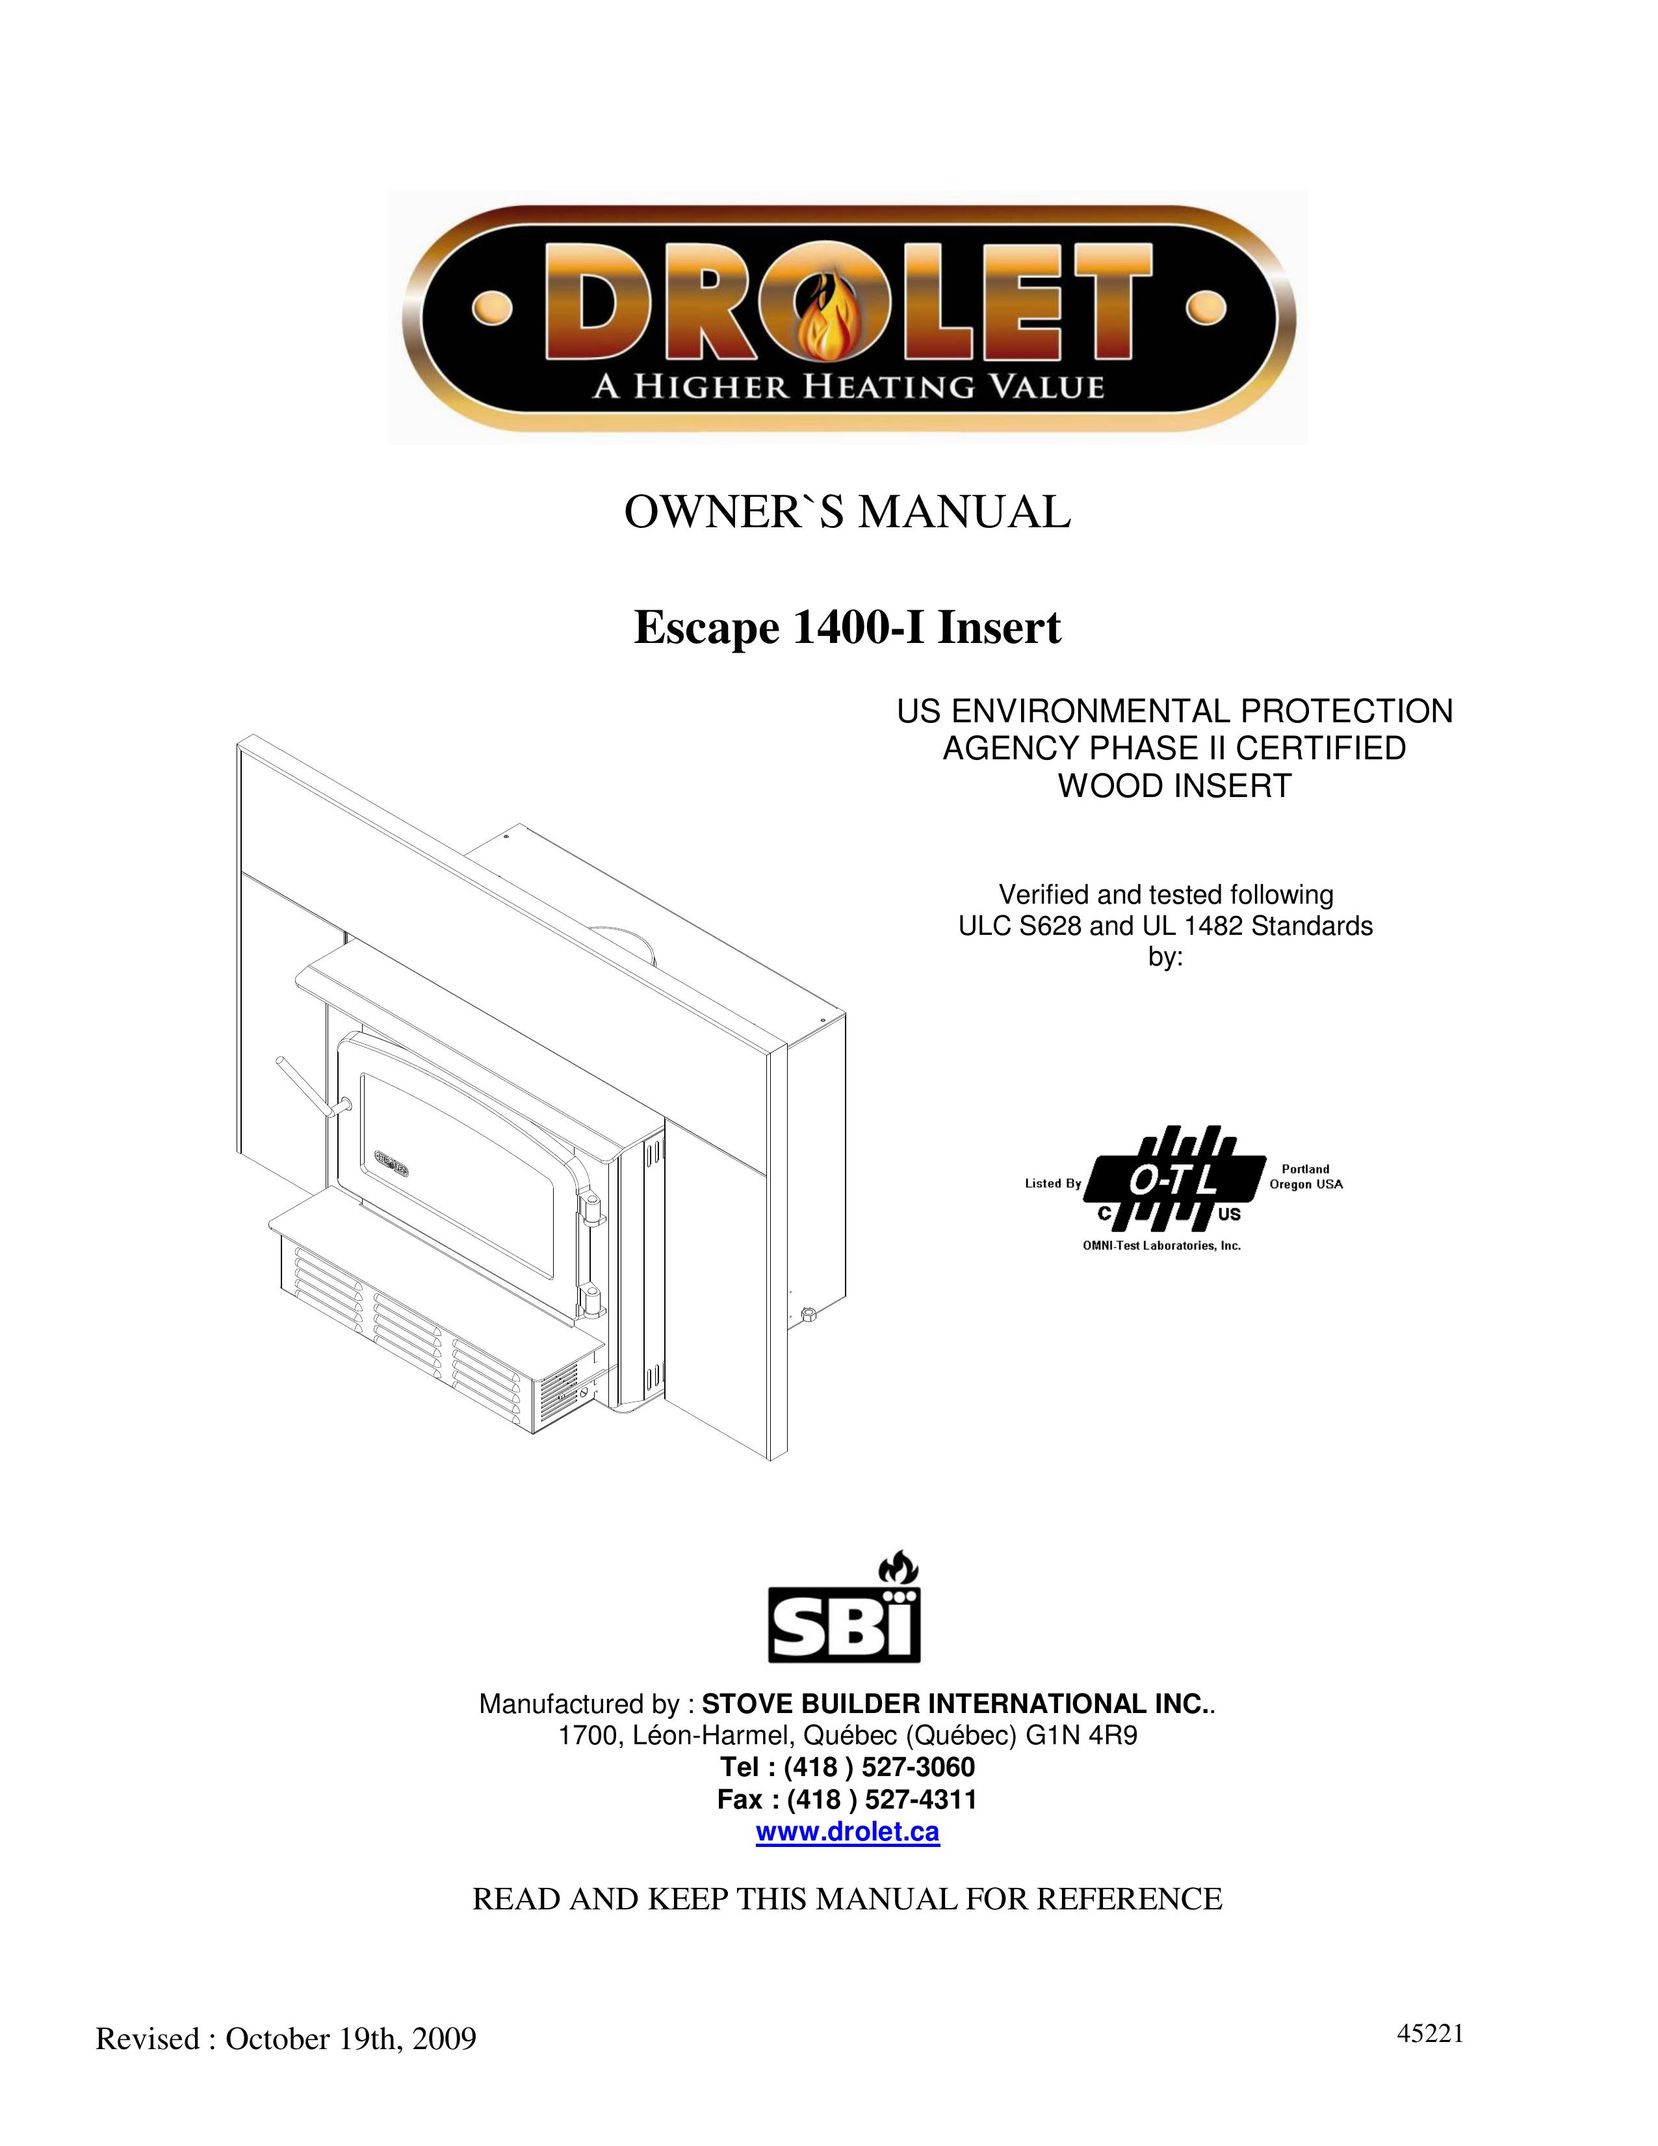 Drolet 45221 Indoor Fireplace User Manual